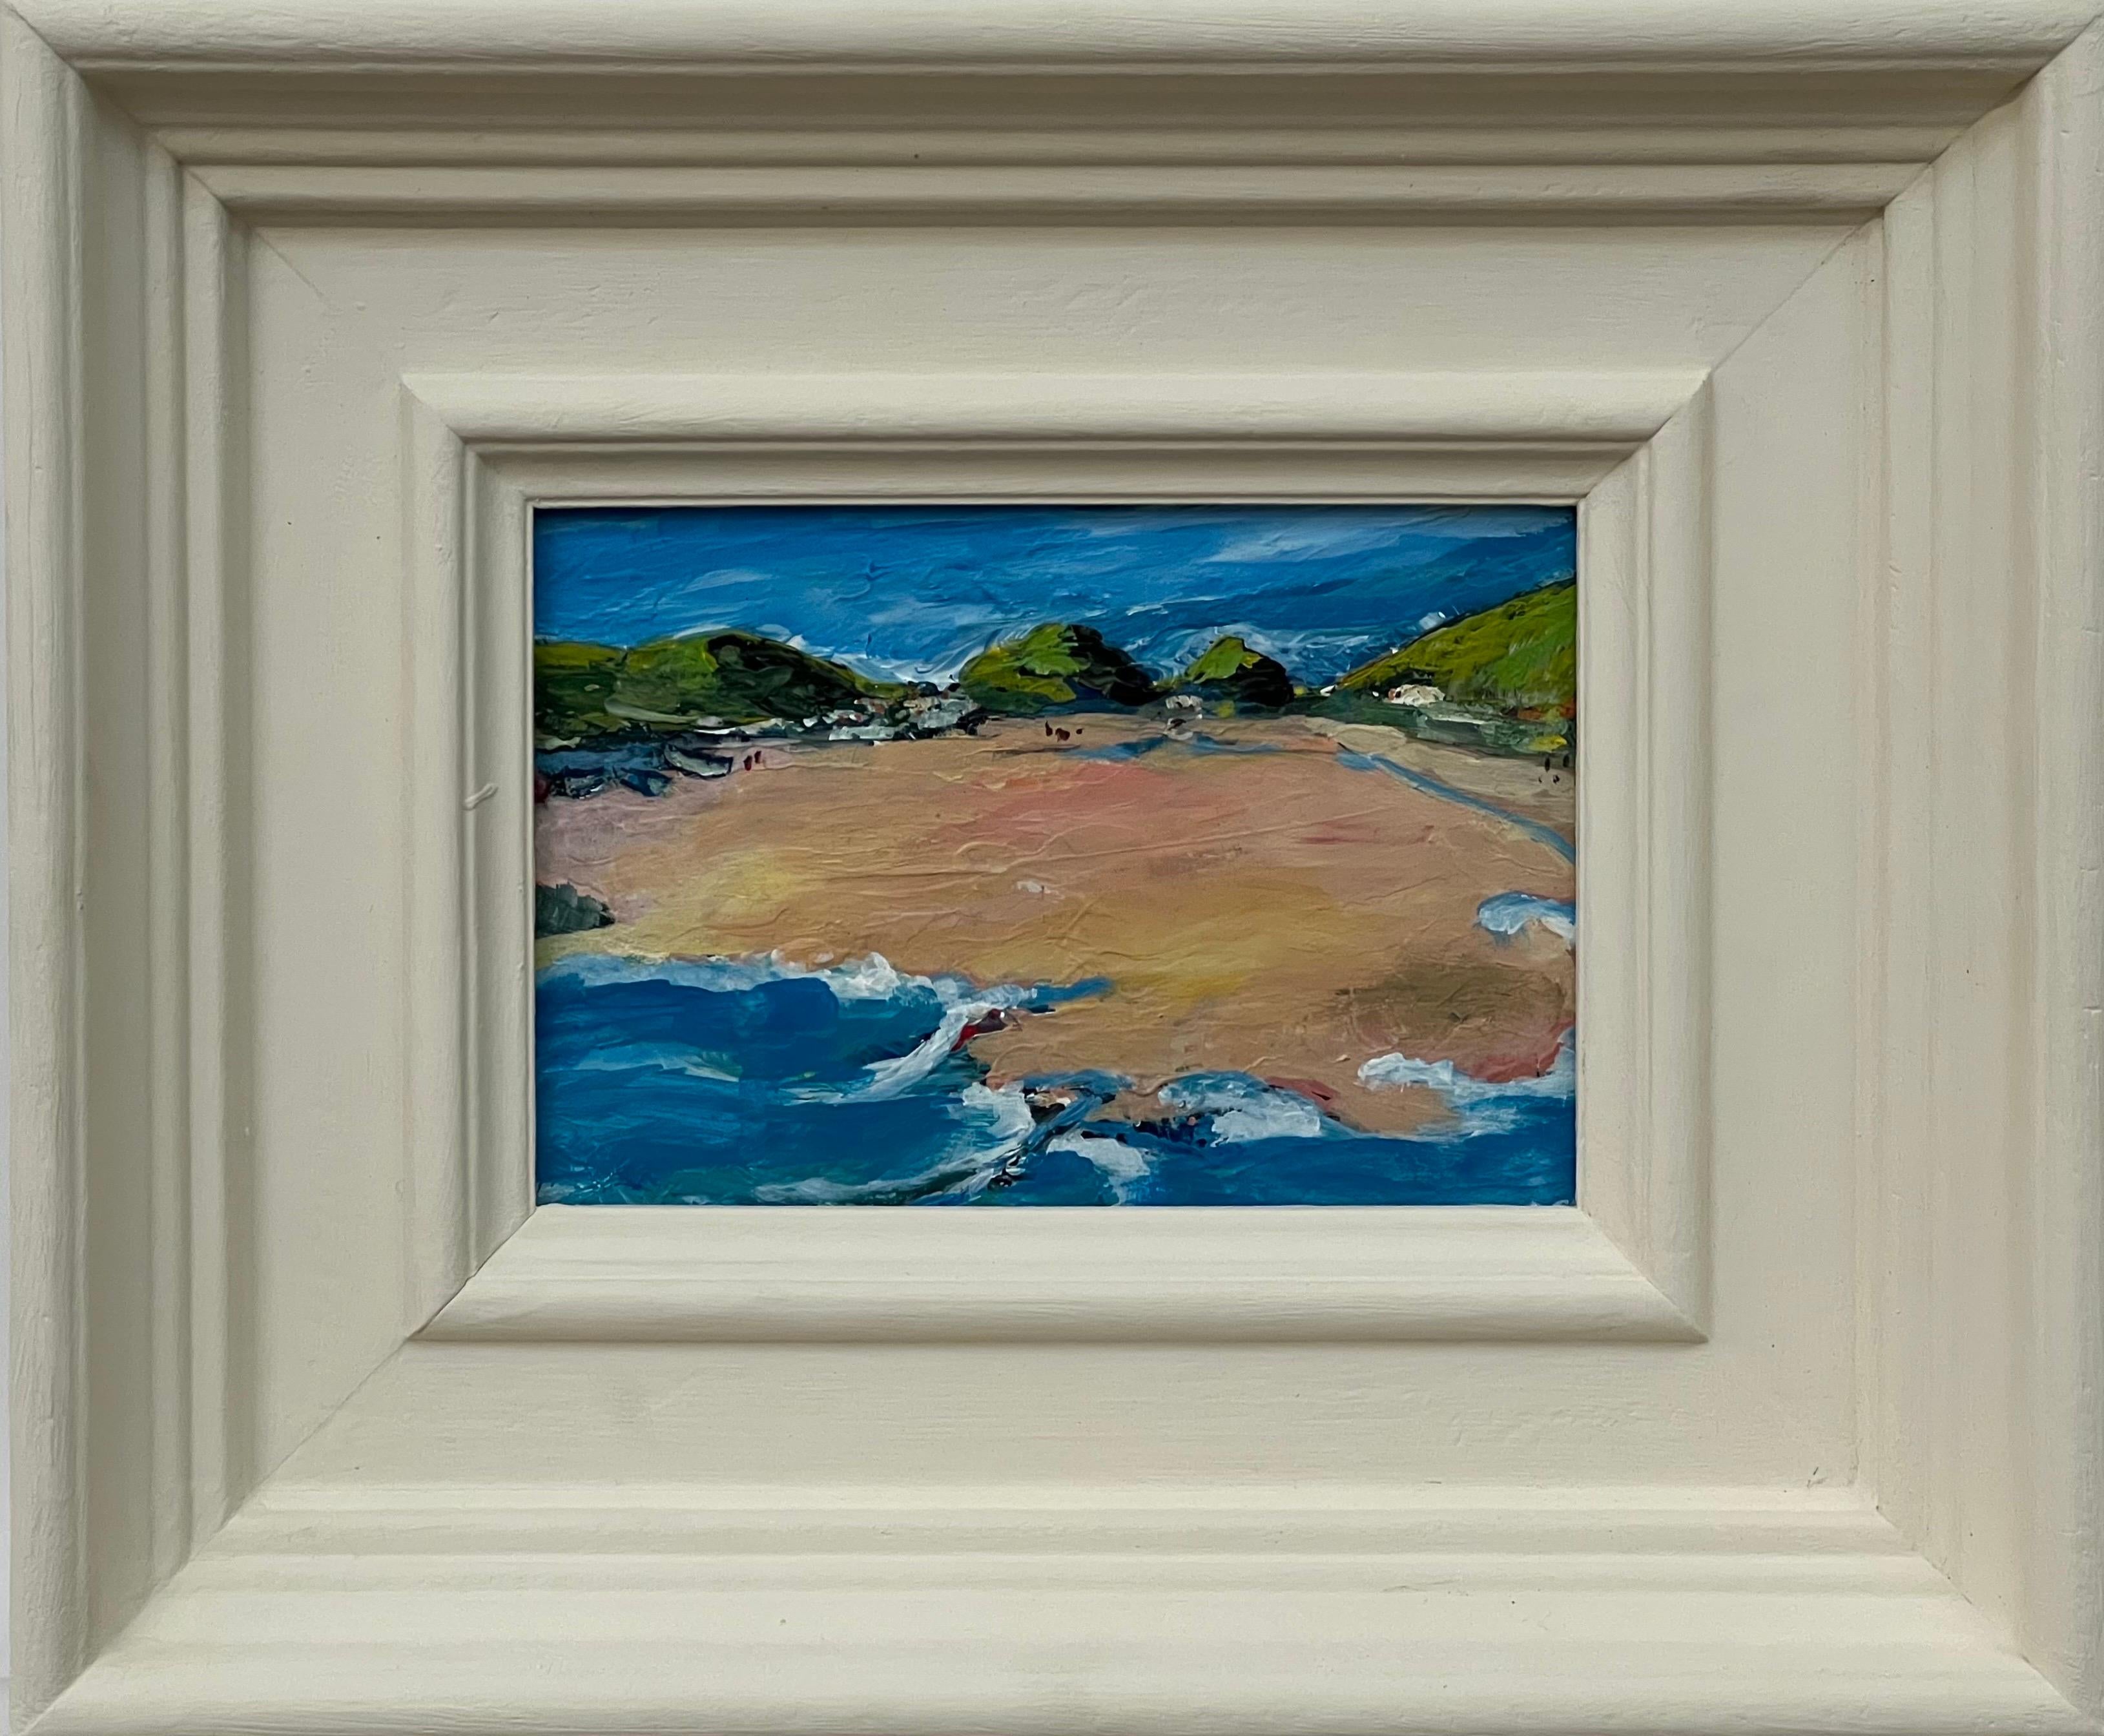 Angela Wakefield Figurative Painting - Miniature Landscape Study of Devon Coastline UK by Contemporary British Artist